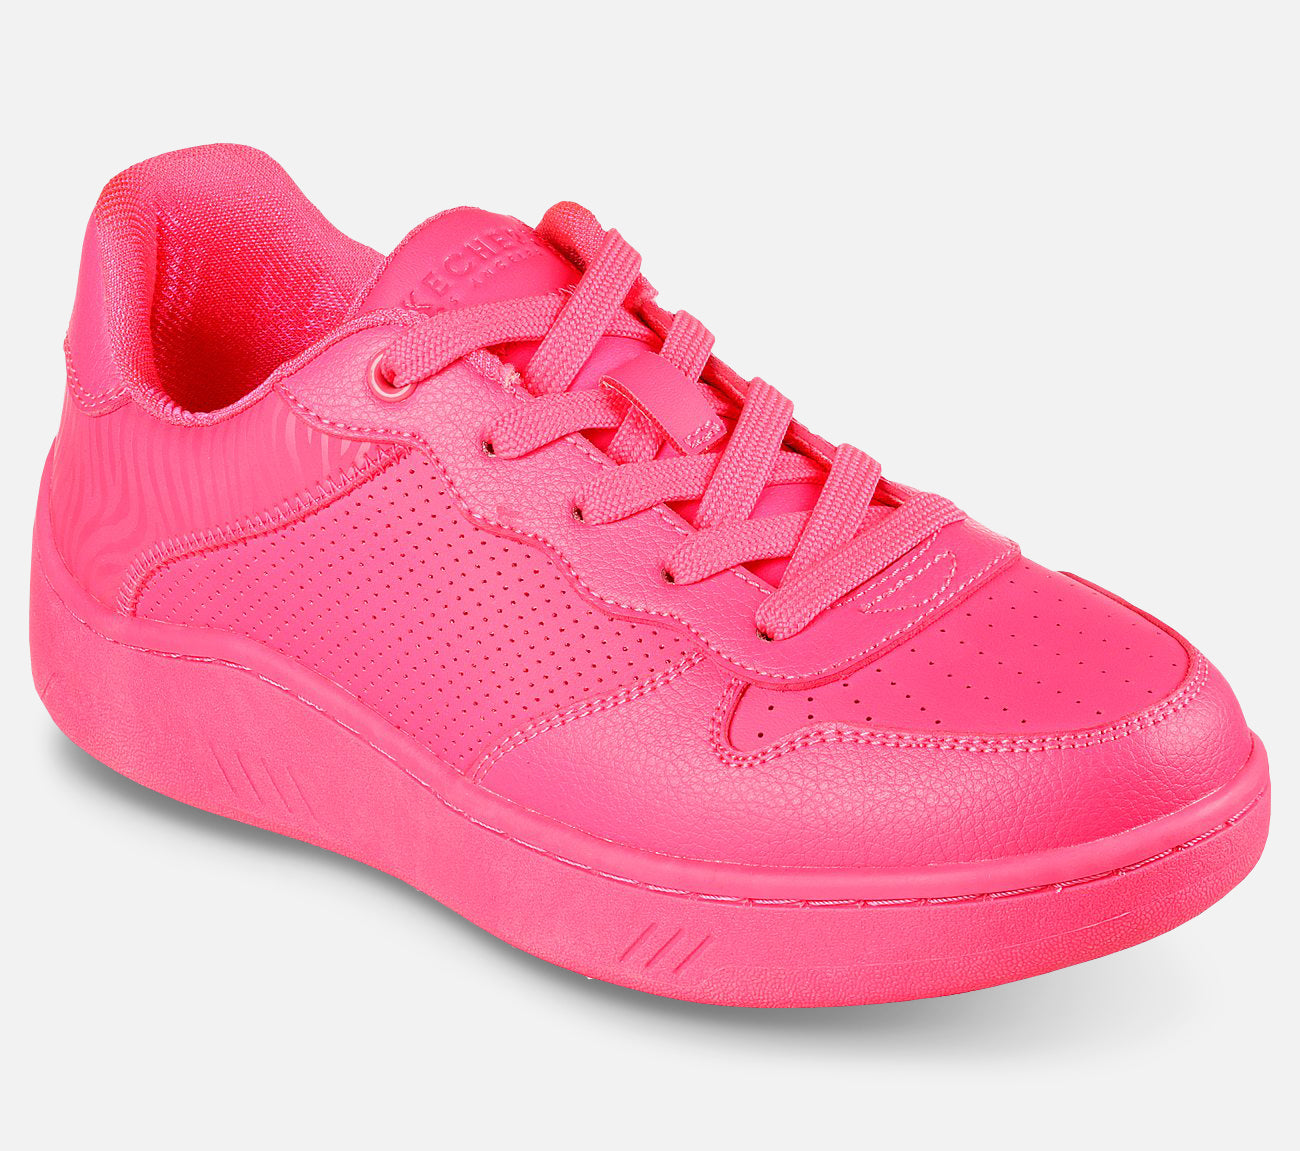 Upbeats - Bright Court Shoe Skechers